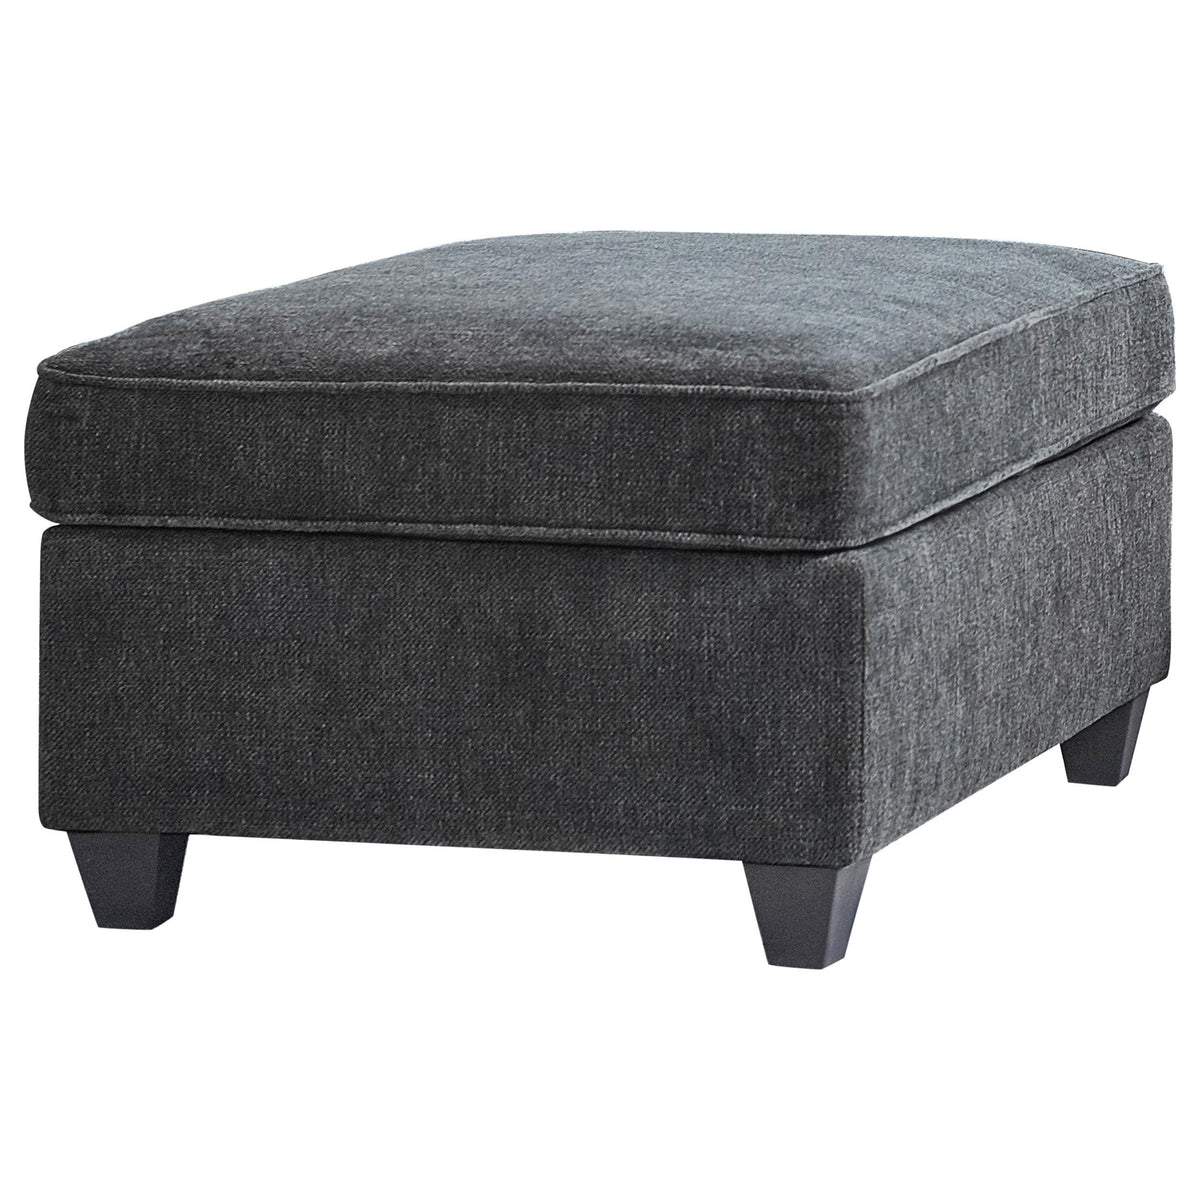 Mccord Upholstered Ottoman Dark Grey Mccord Upholstered Ottoman Dark Grey Half Price Furniture